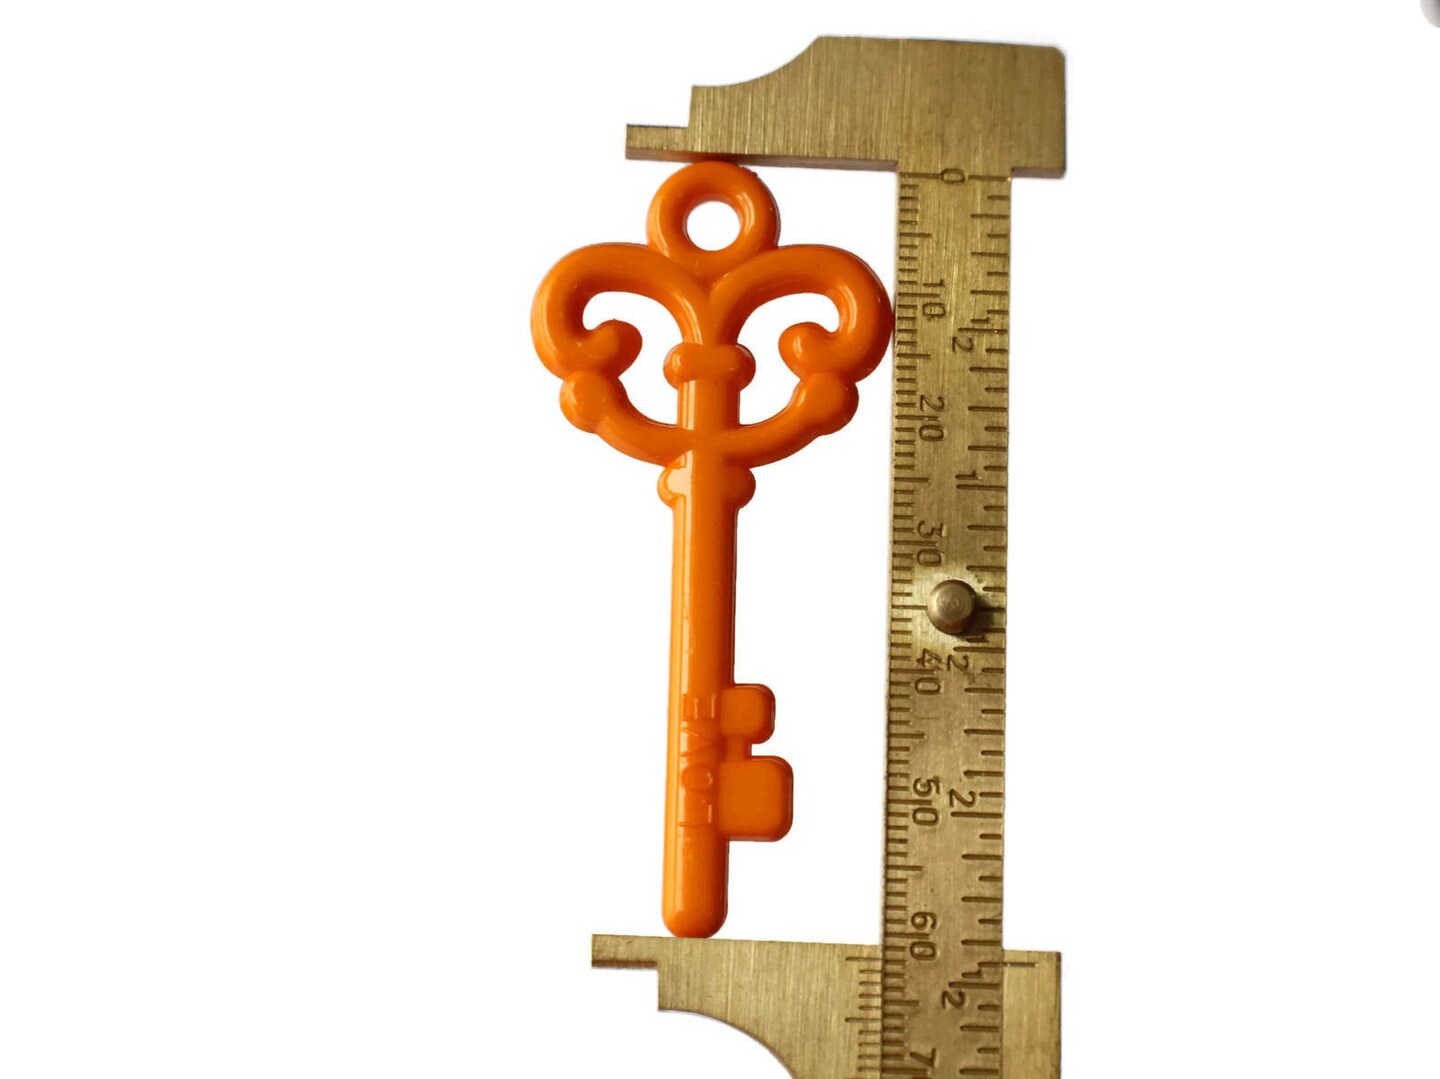 8 62mm Orange Skeleton Key Charms - Plastic Key Pendants